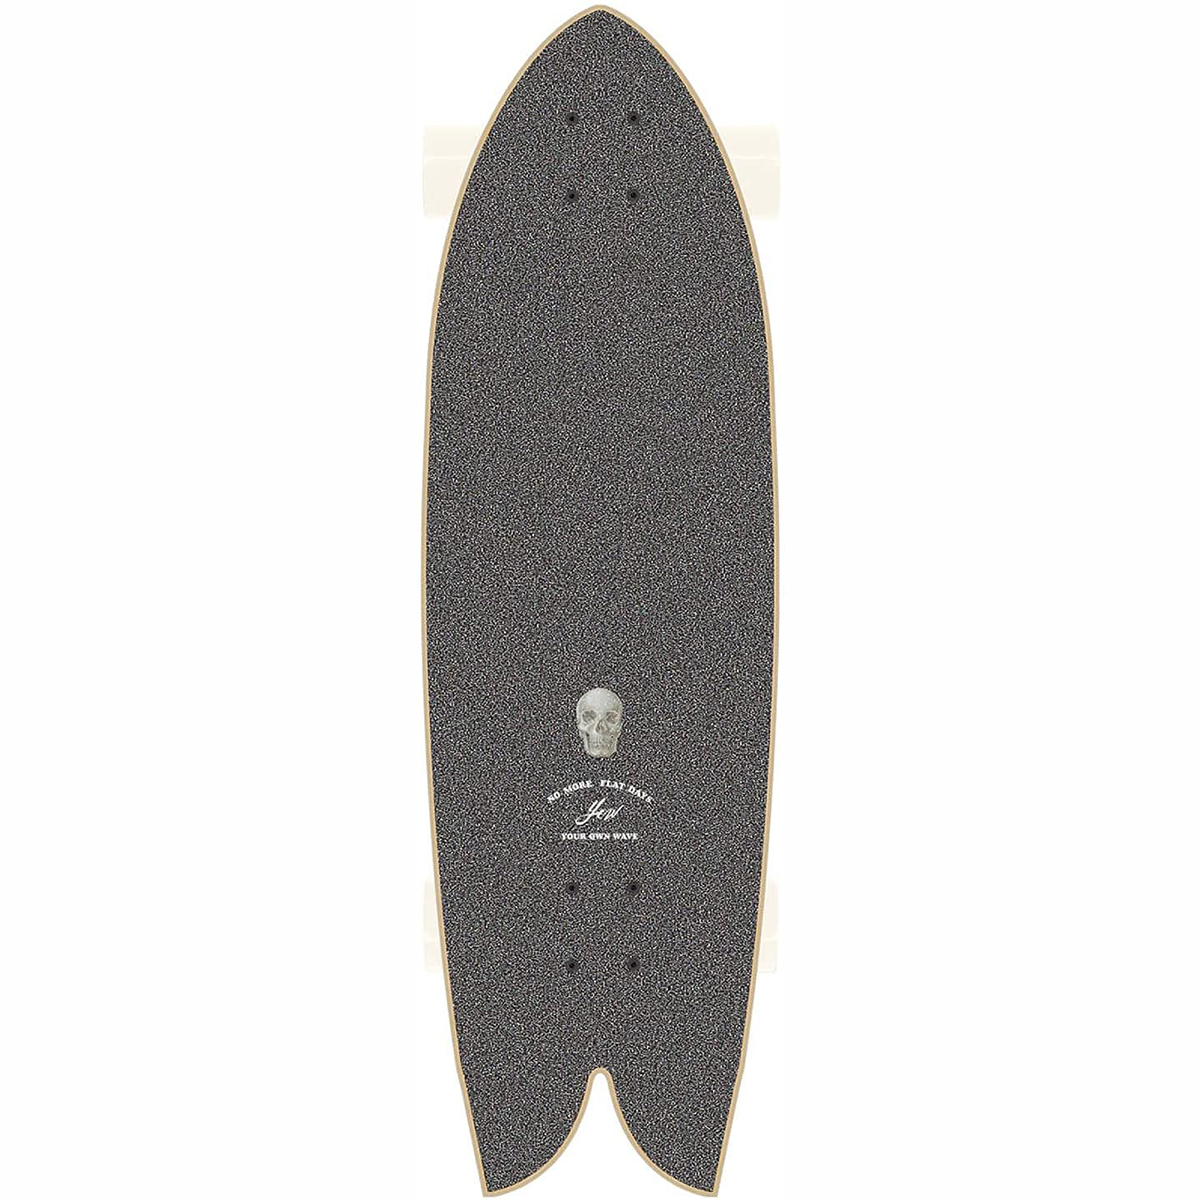 Surfskate YOW C-Hawk Christenson 9.85" shape